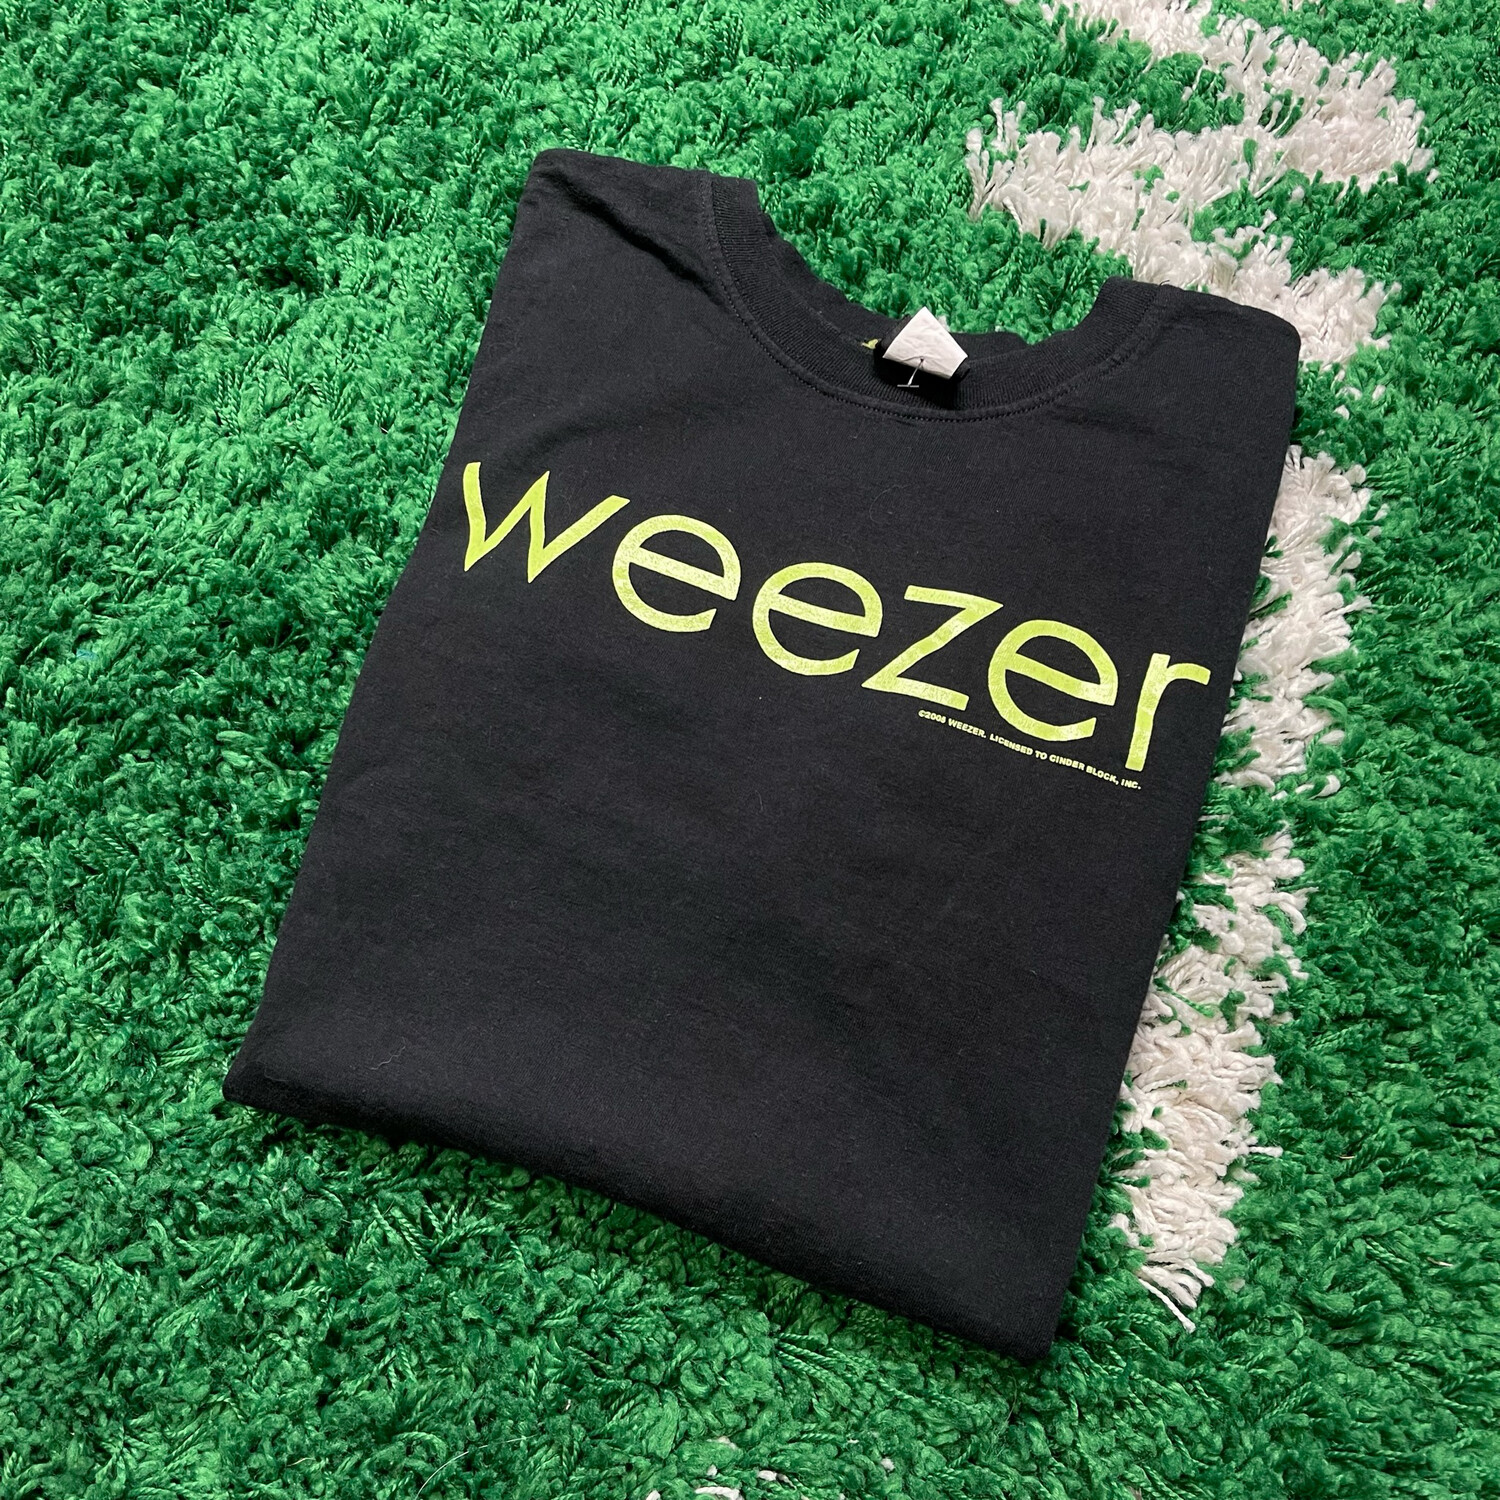 Weezer 2003 Tee Size Medium